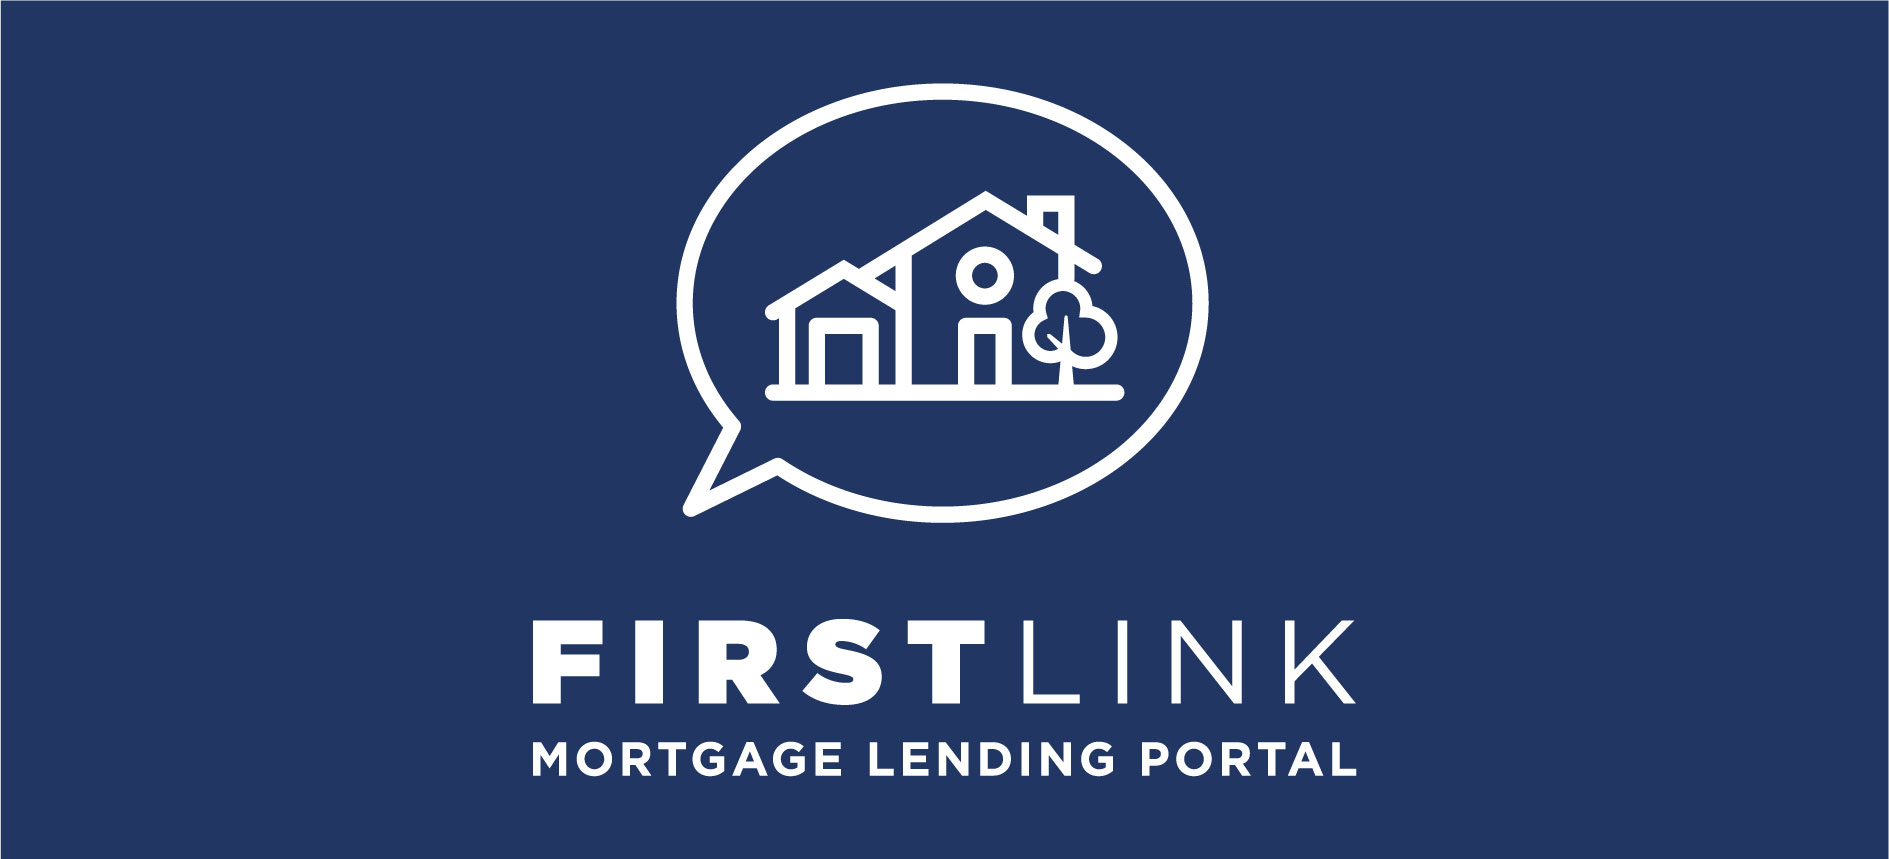 First Link Mortgage Lending Portal Logo